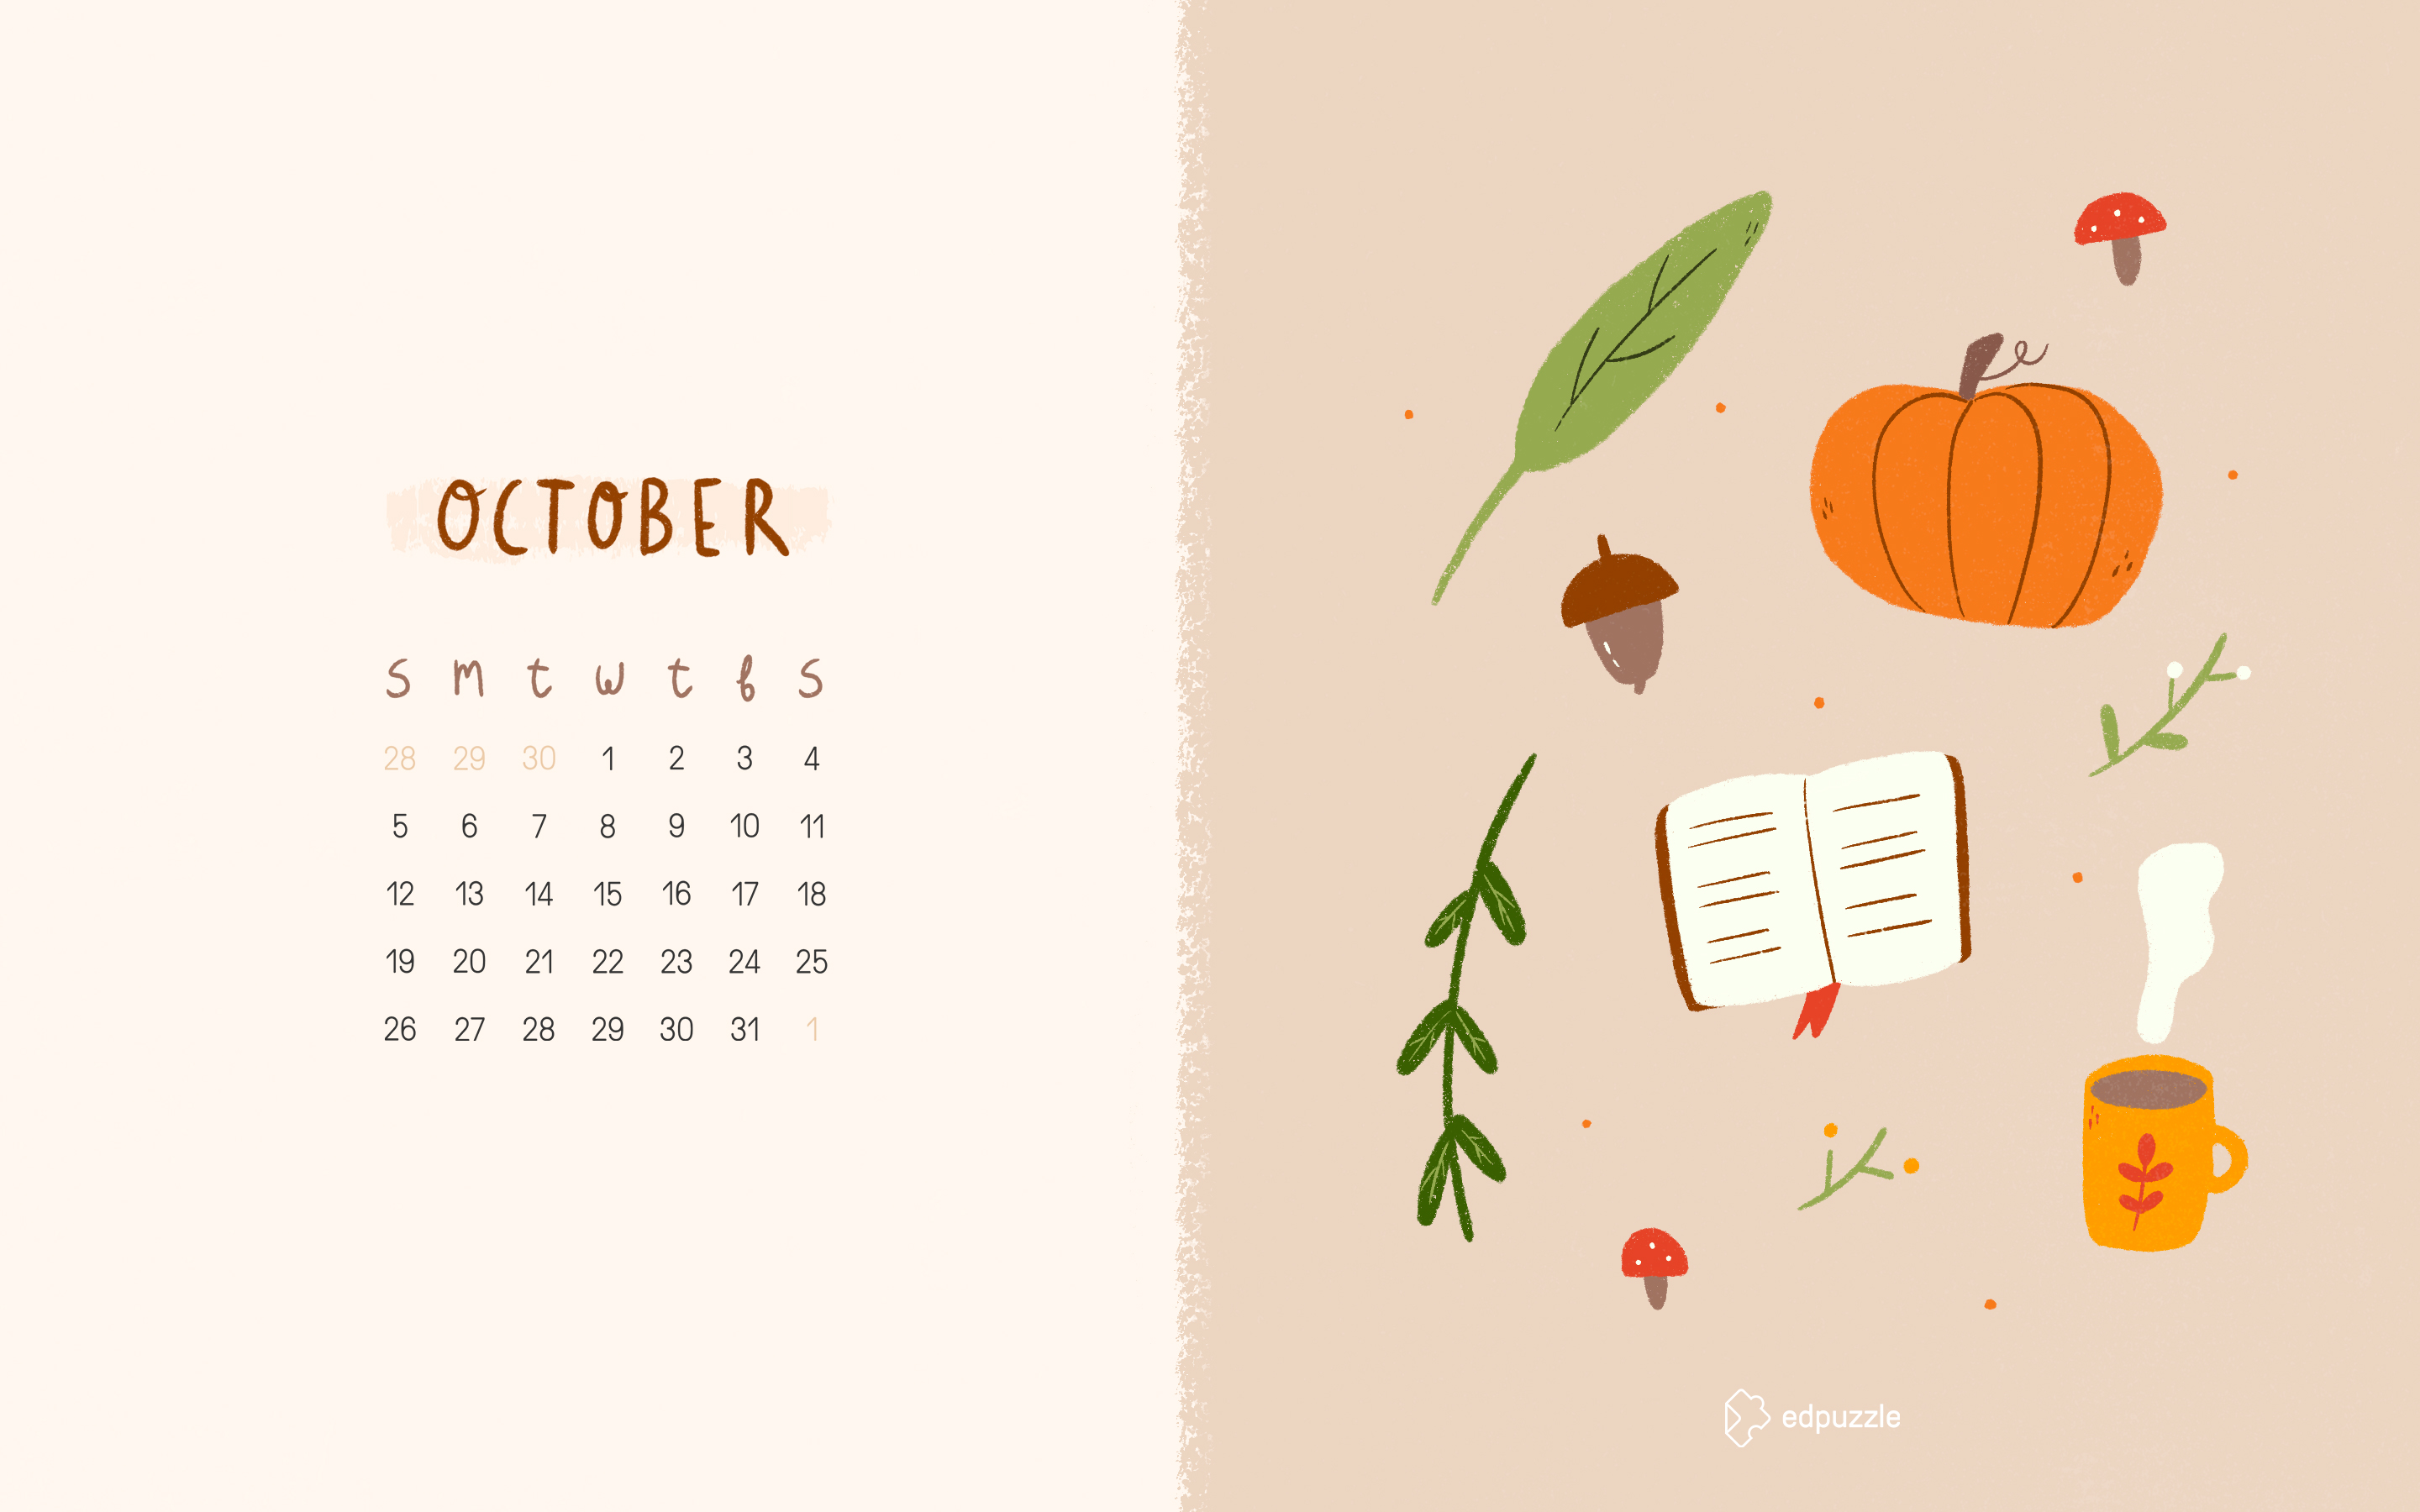 🔥 Download October Calendar Wallpaper Edpuzzle by wesleys 2020